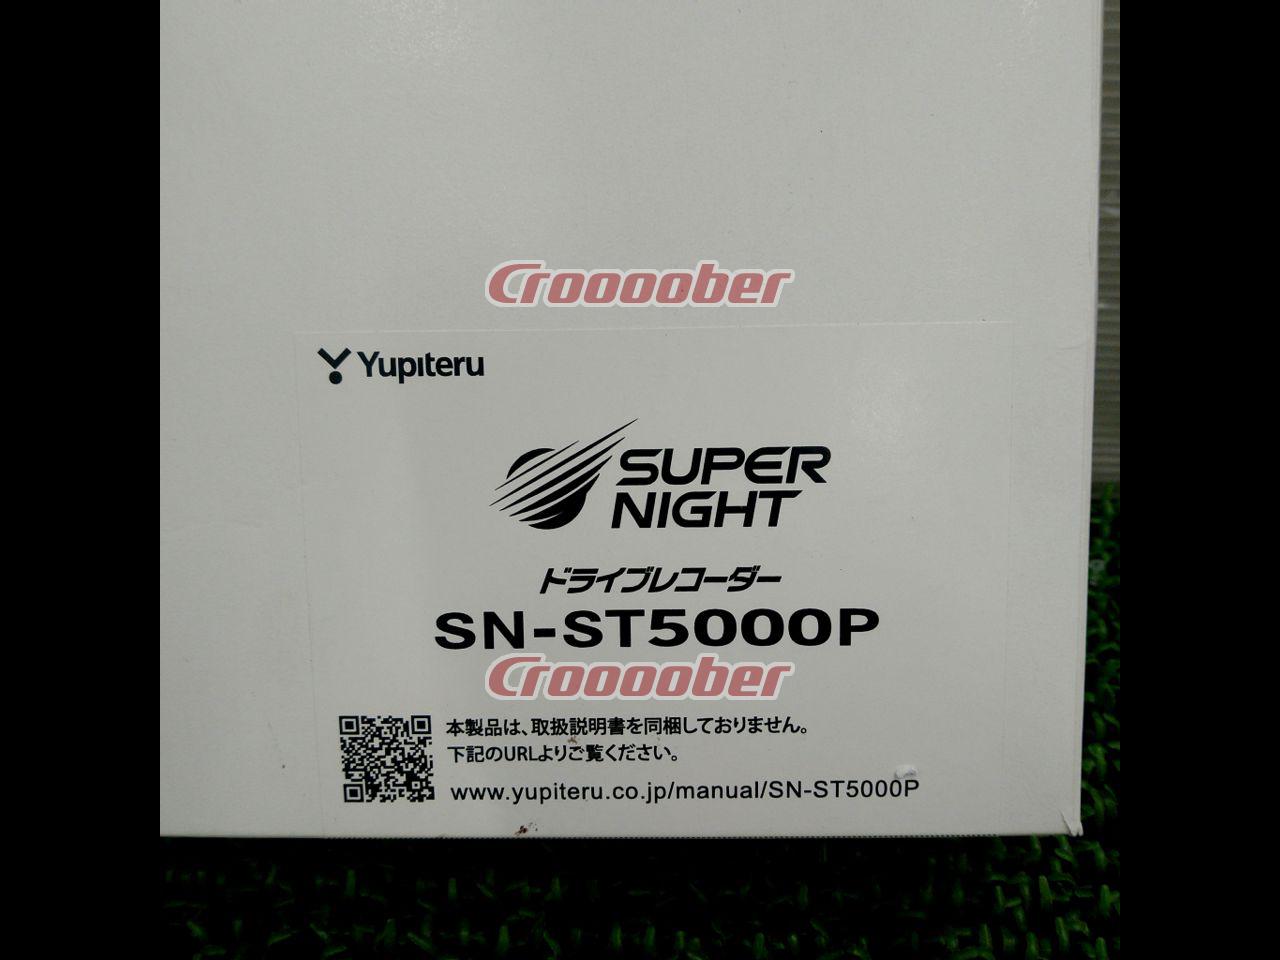 Yupiteru ドライブレコーダー SN-ST5000P FullHD200万画素/HDR/GPS・G